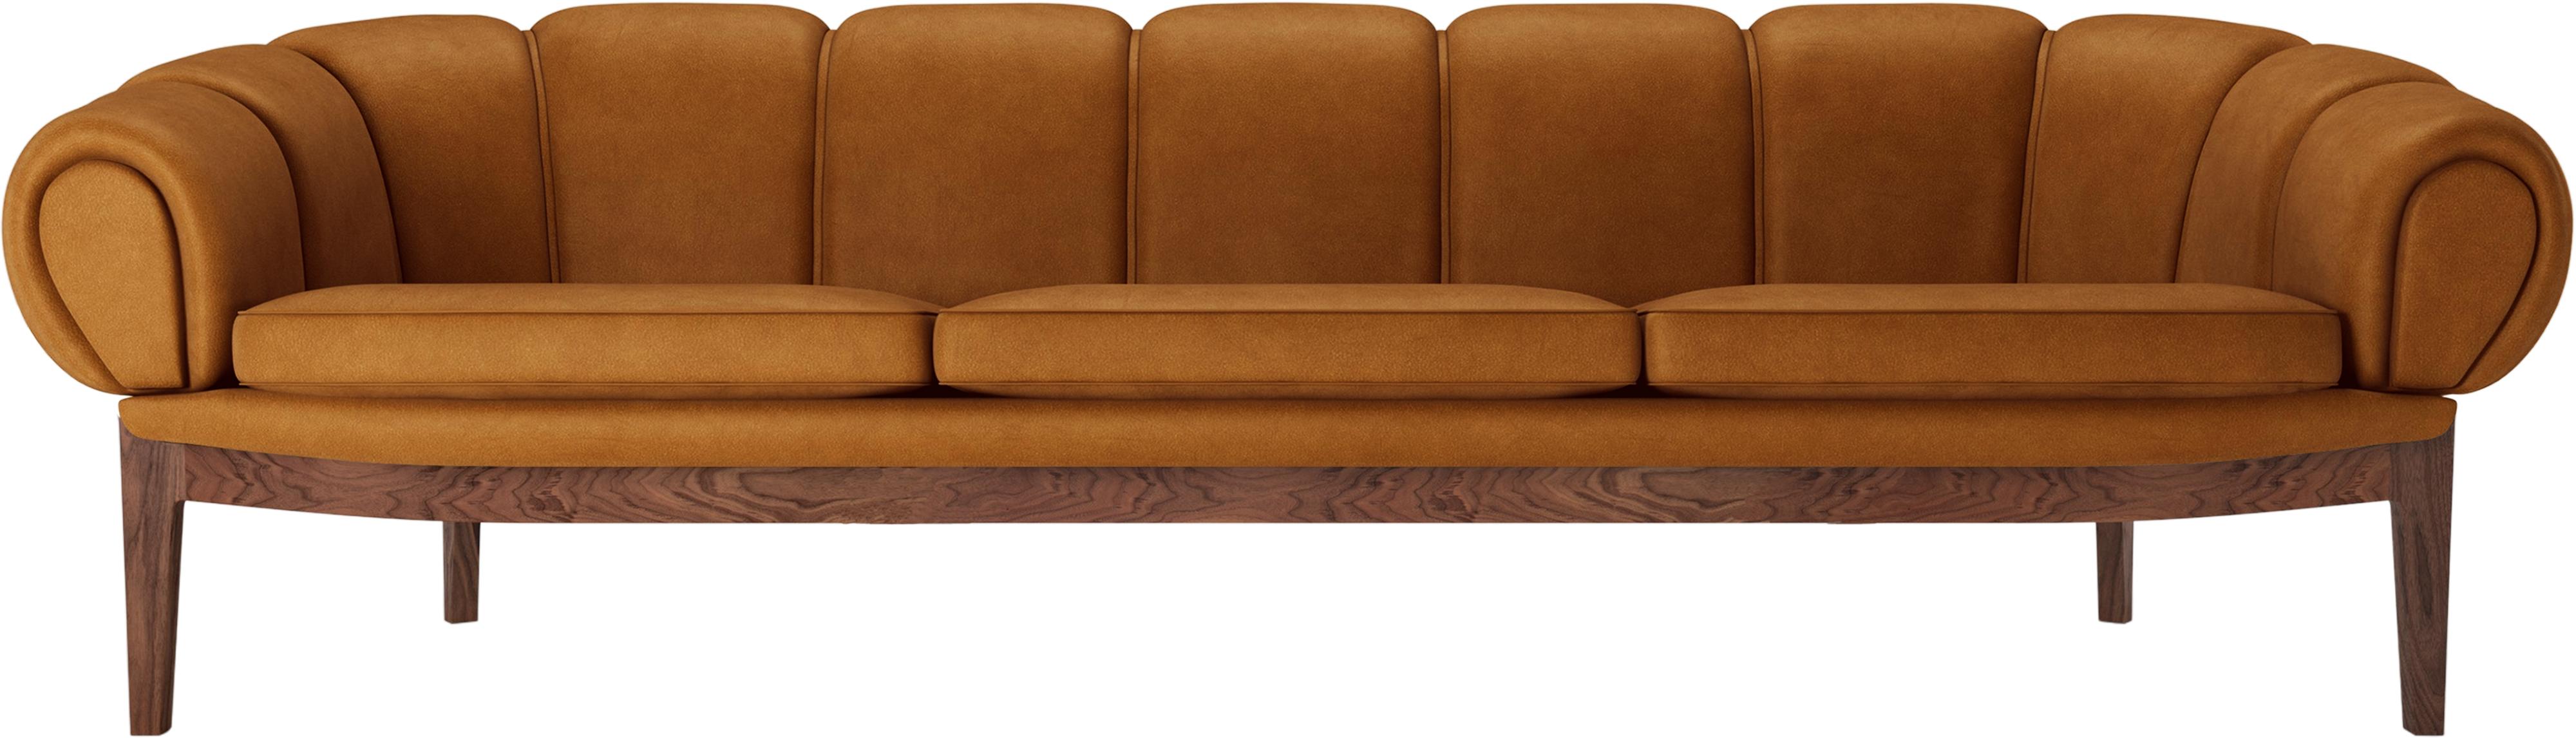 Danish Leather 'Croissant' Sofa by Illum Wikkelsø for Gubi with Walnut Legs For Sale